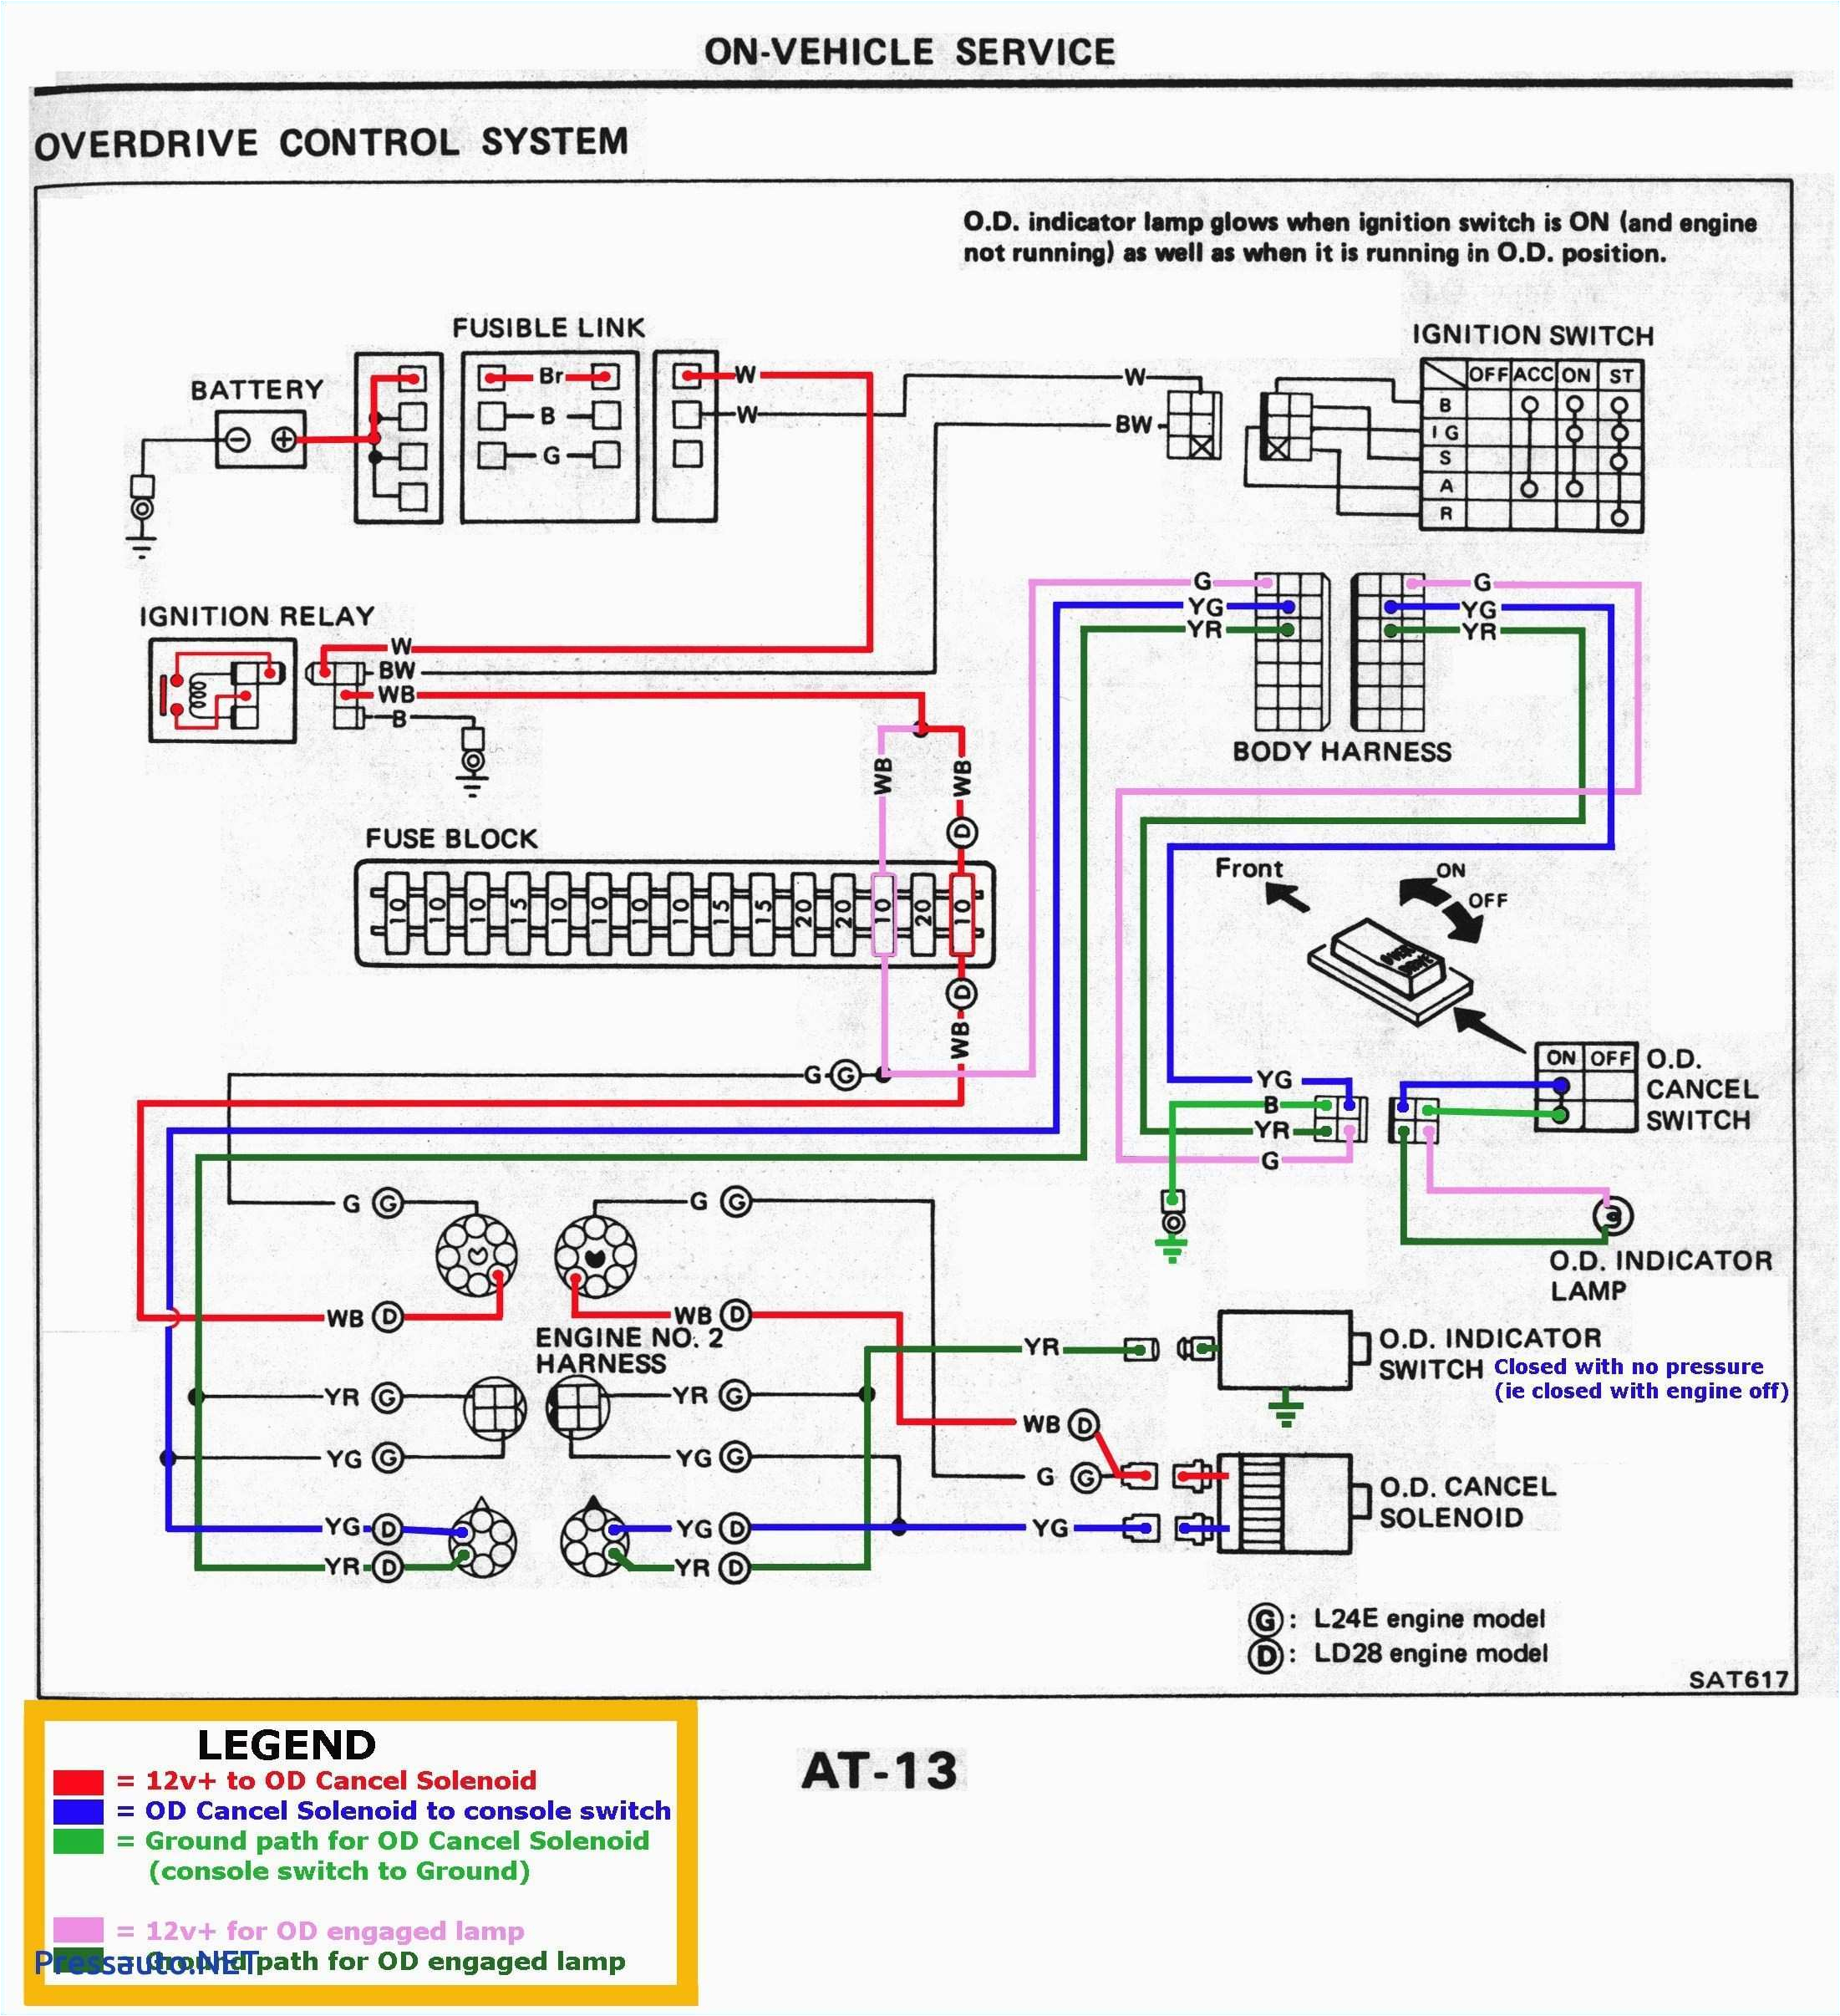 microtech lt8 wiring diagram elegant new invisible fence wiring diagram diagram wiring diagram collection jpg